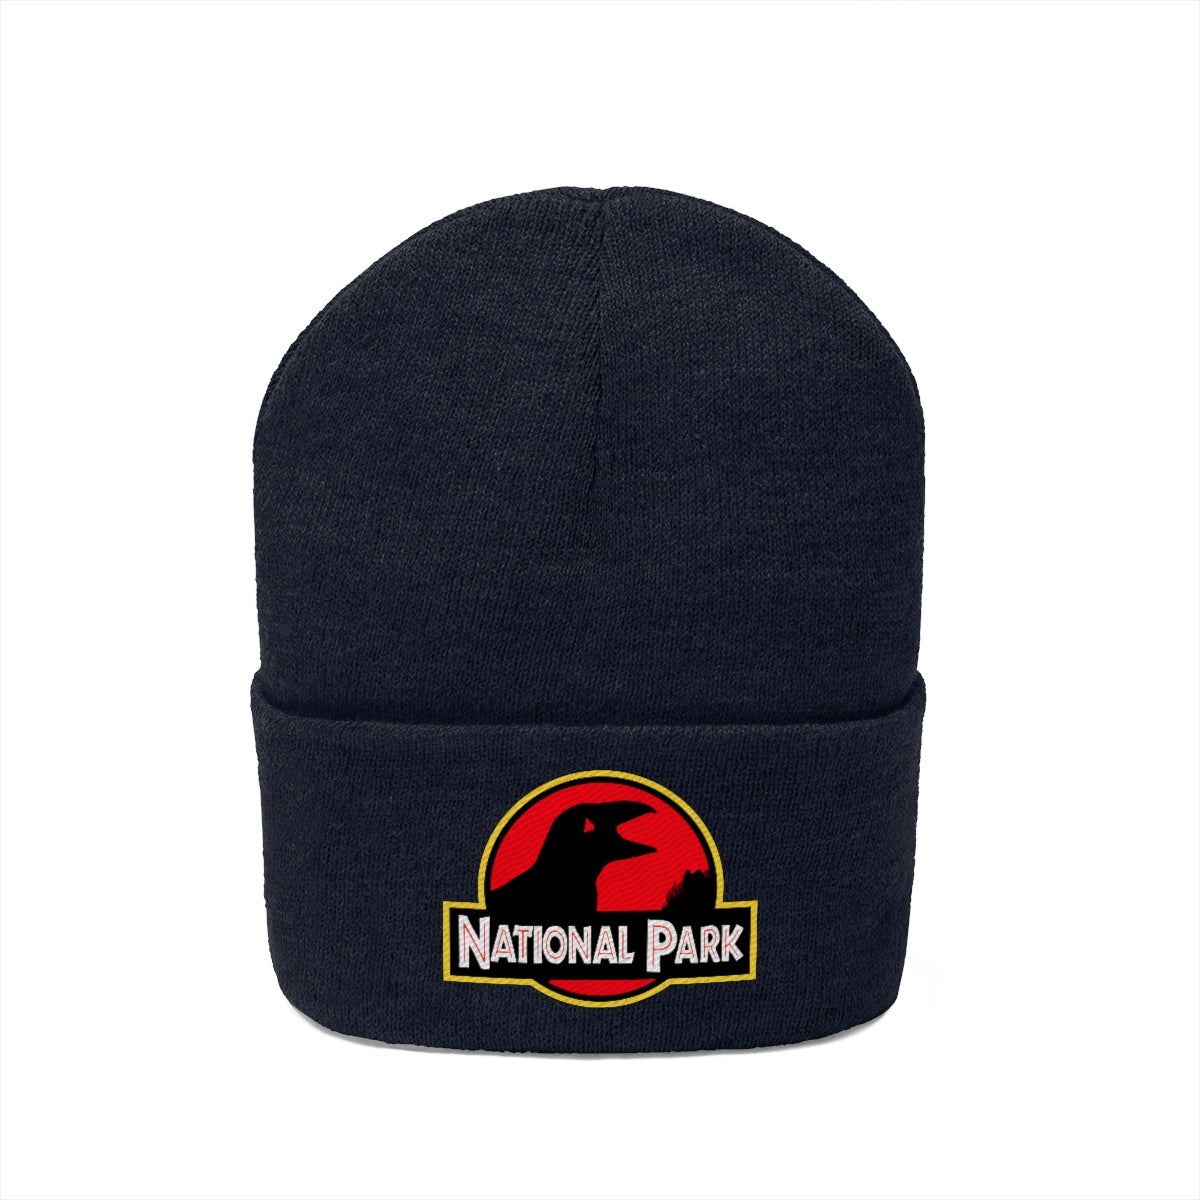 Acadia National Park Hat - Puffin Knit Beanie Sewn Parody Logo